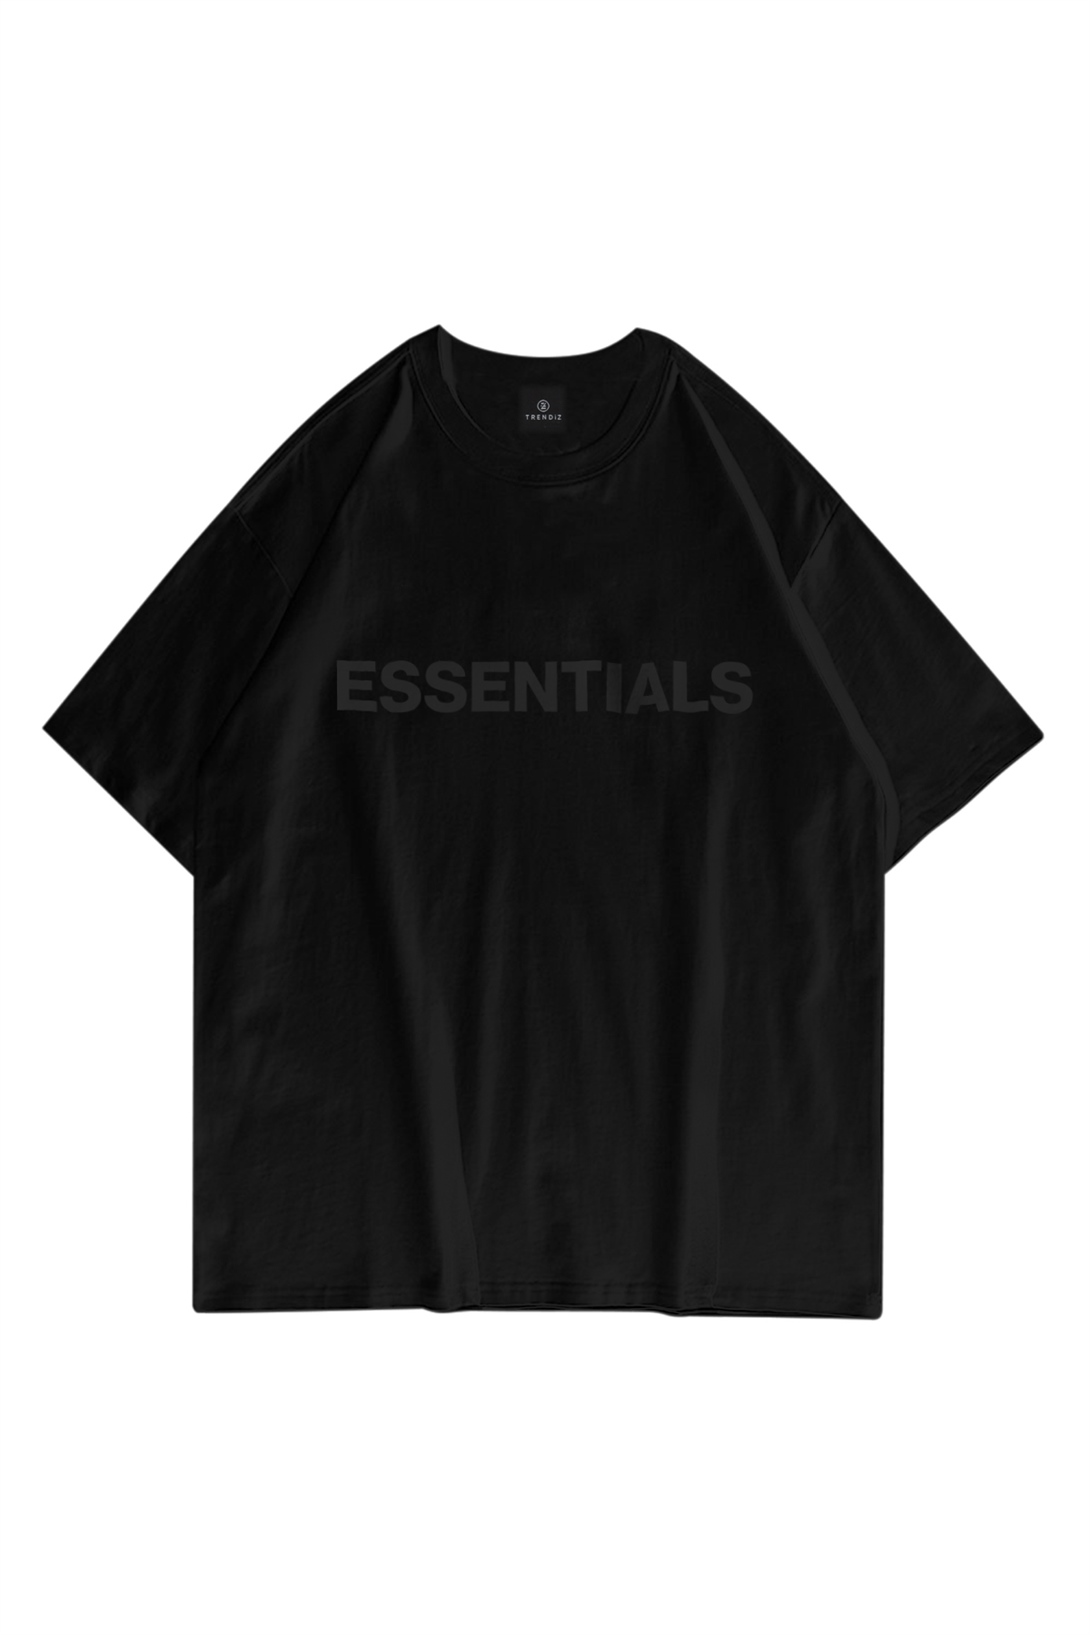 Trendiz Unisex Essentials Siyah Tshirt